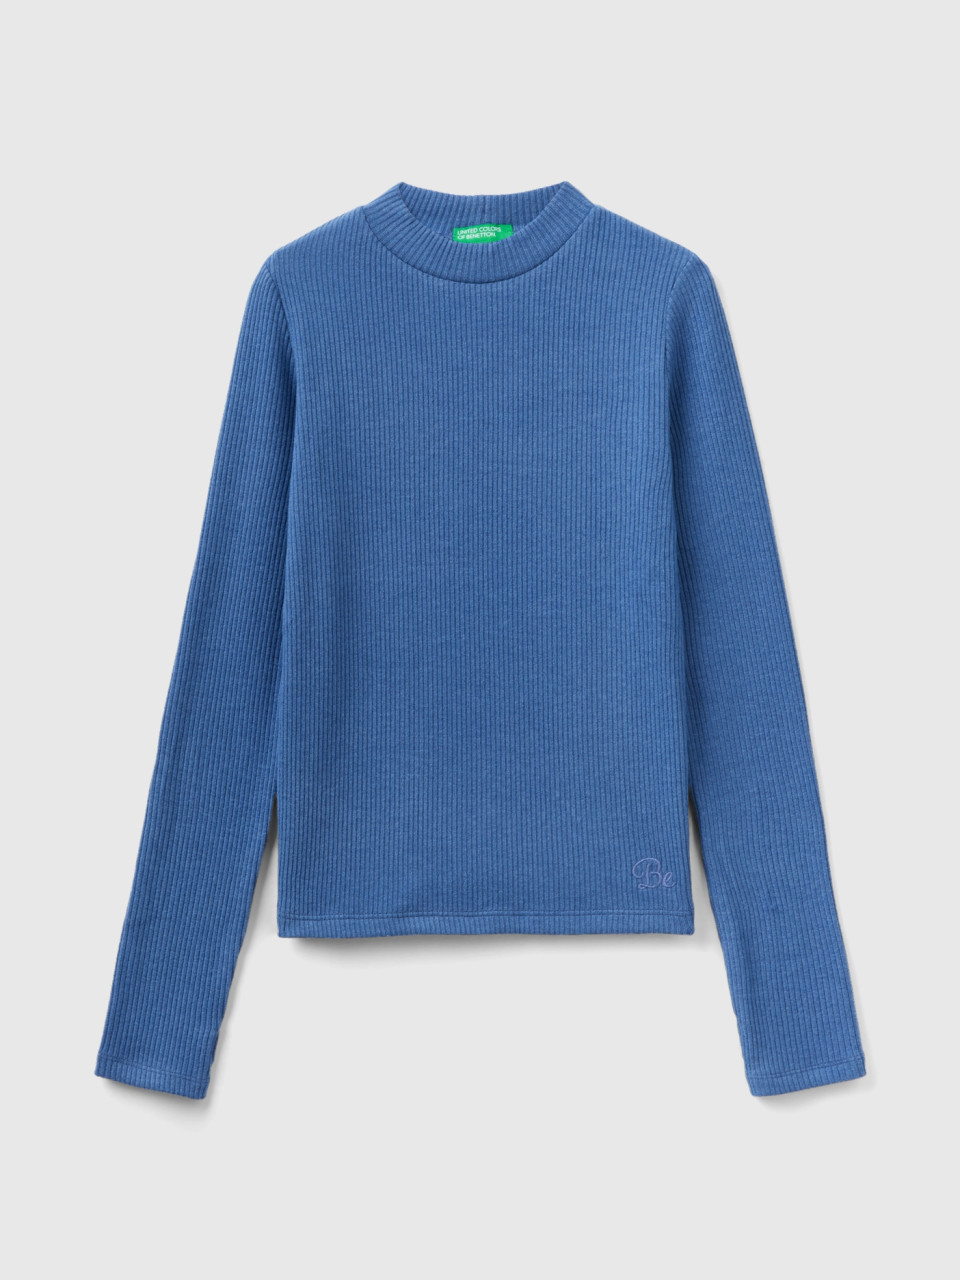 Benetton, Warmes Slim-fit-t-shirt Im Rippenmuster, Taubenblau, female